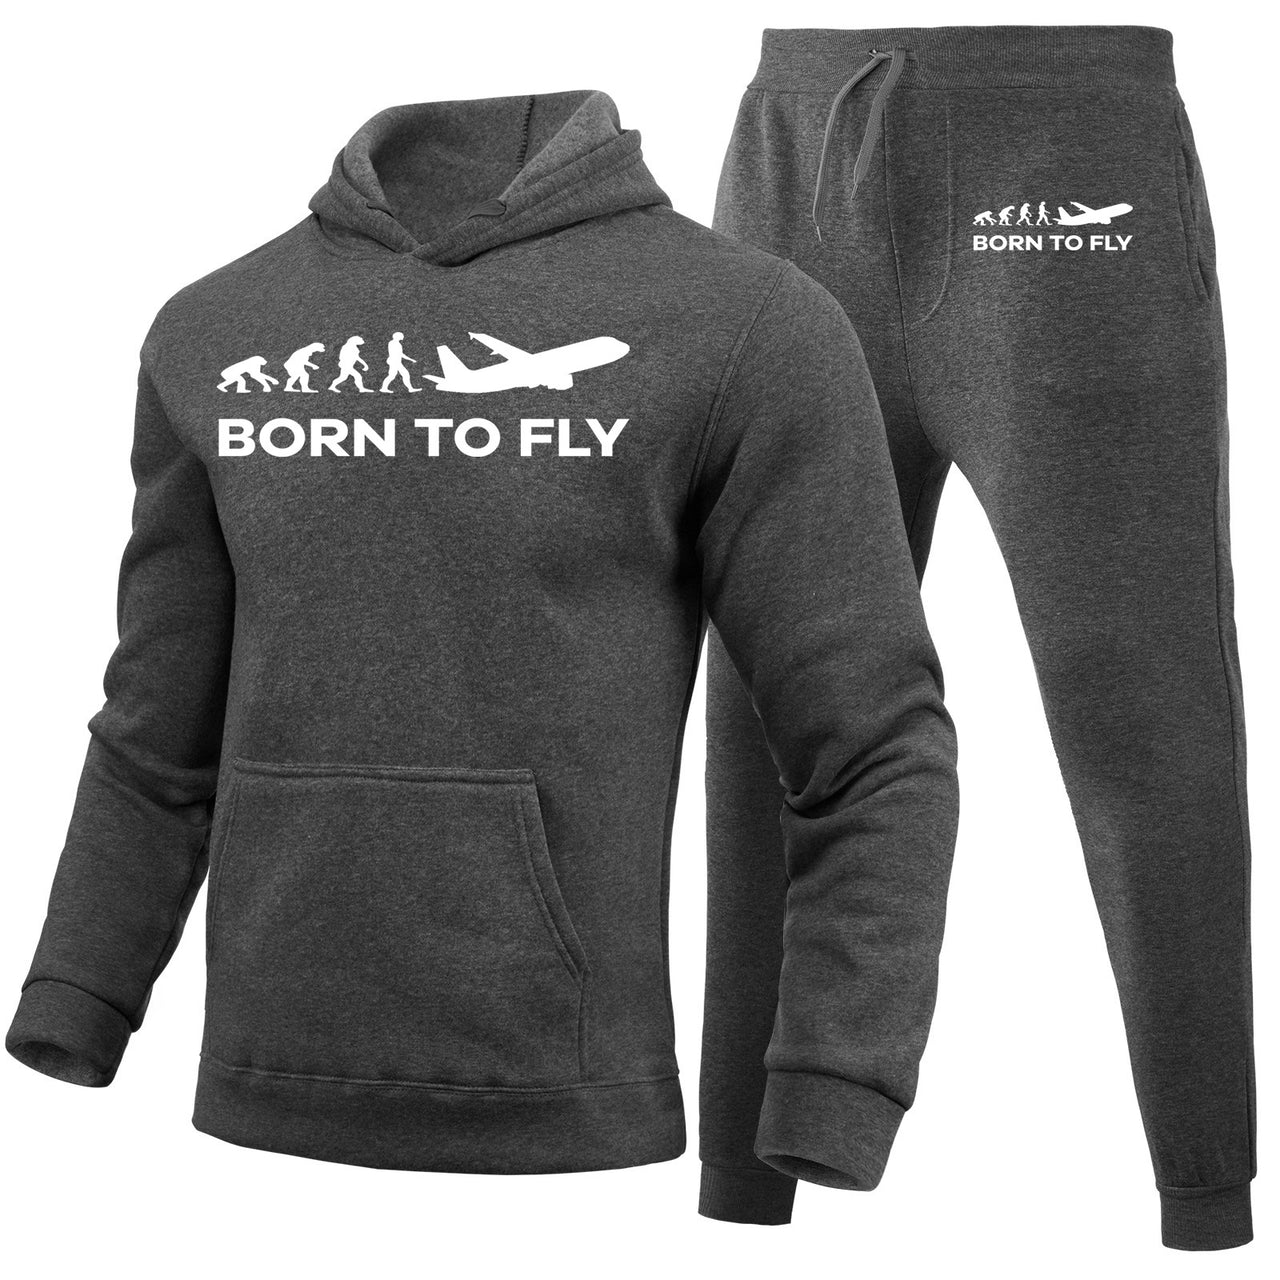 Born To Fly Designed Hoodies & Sweatpants Set